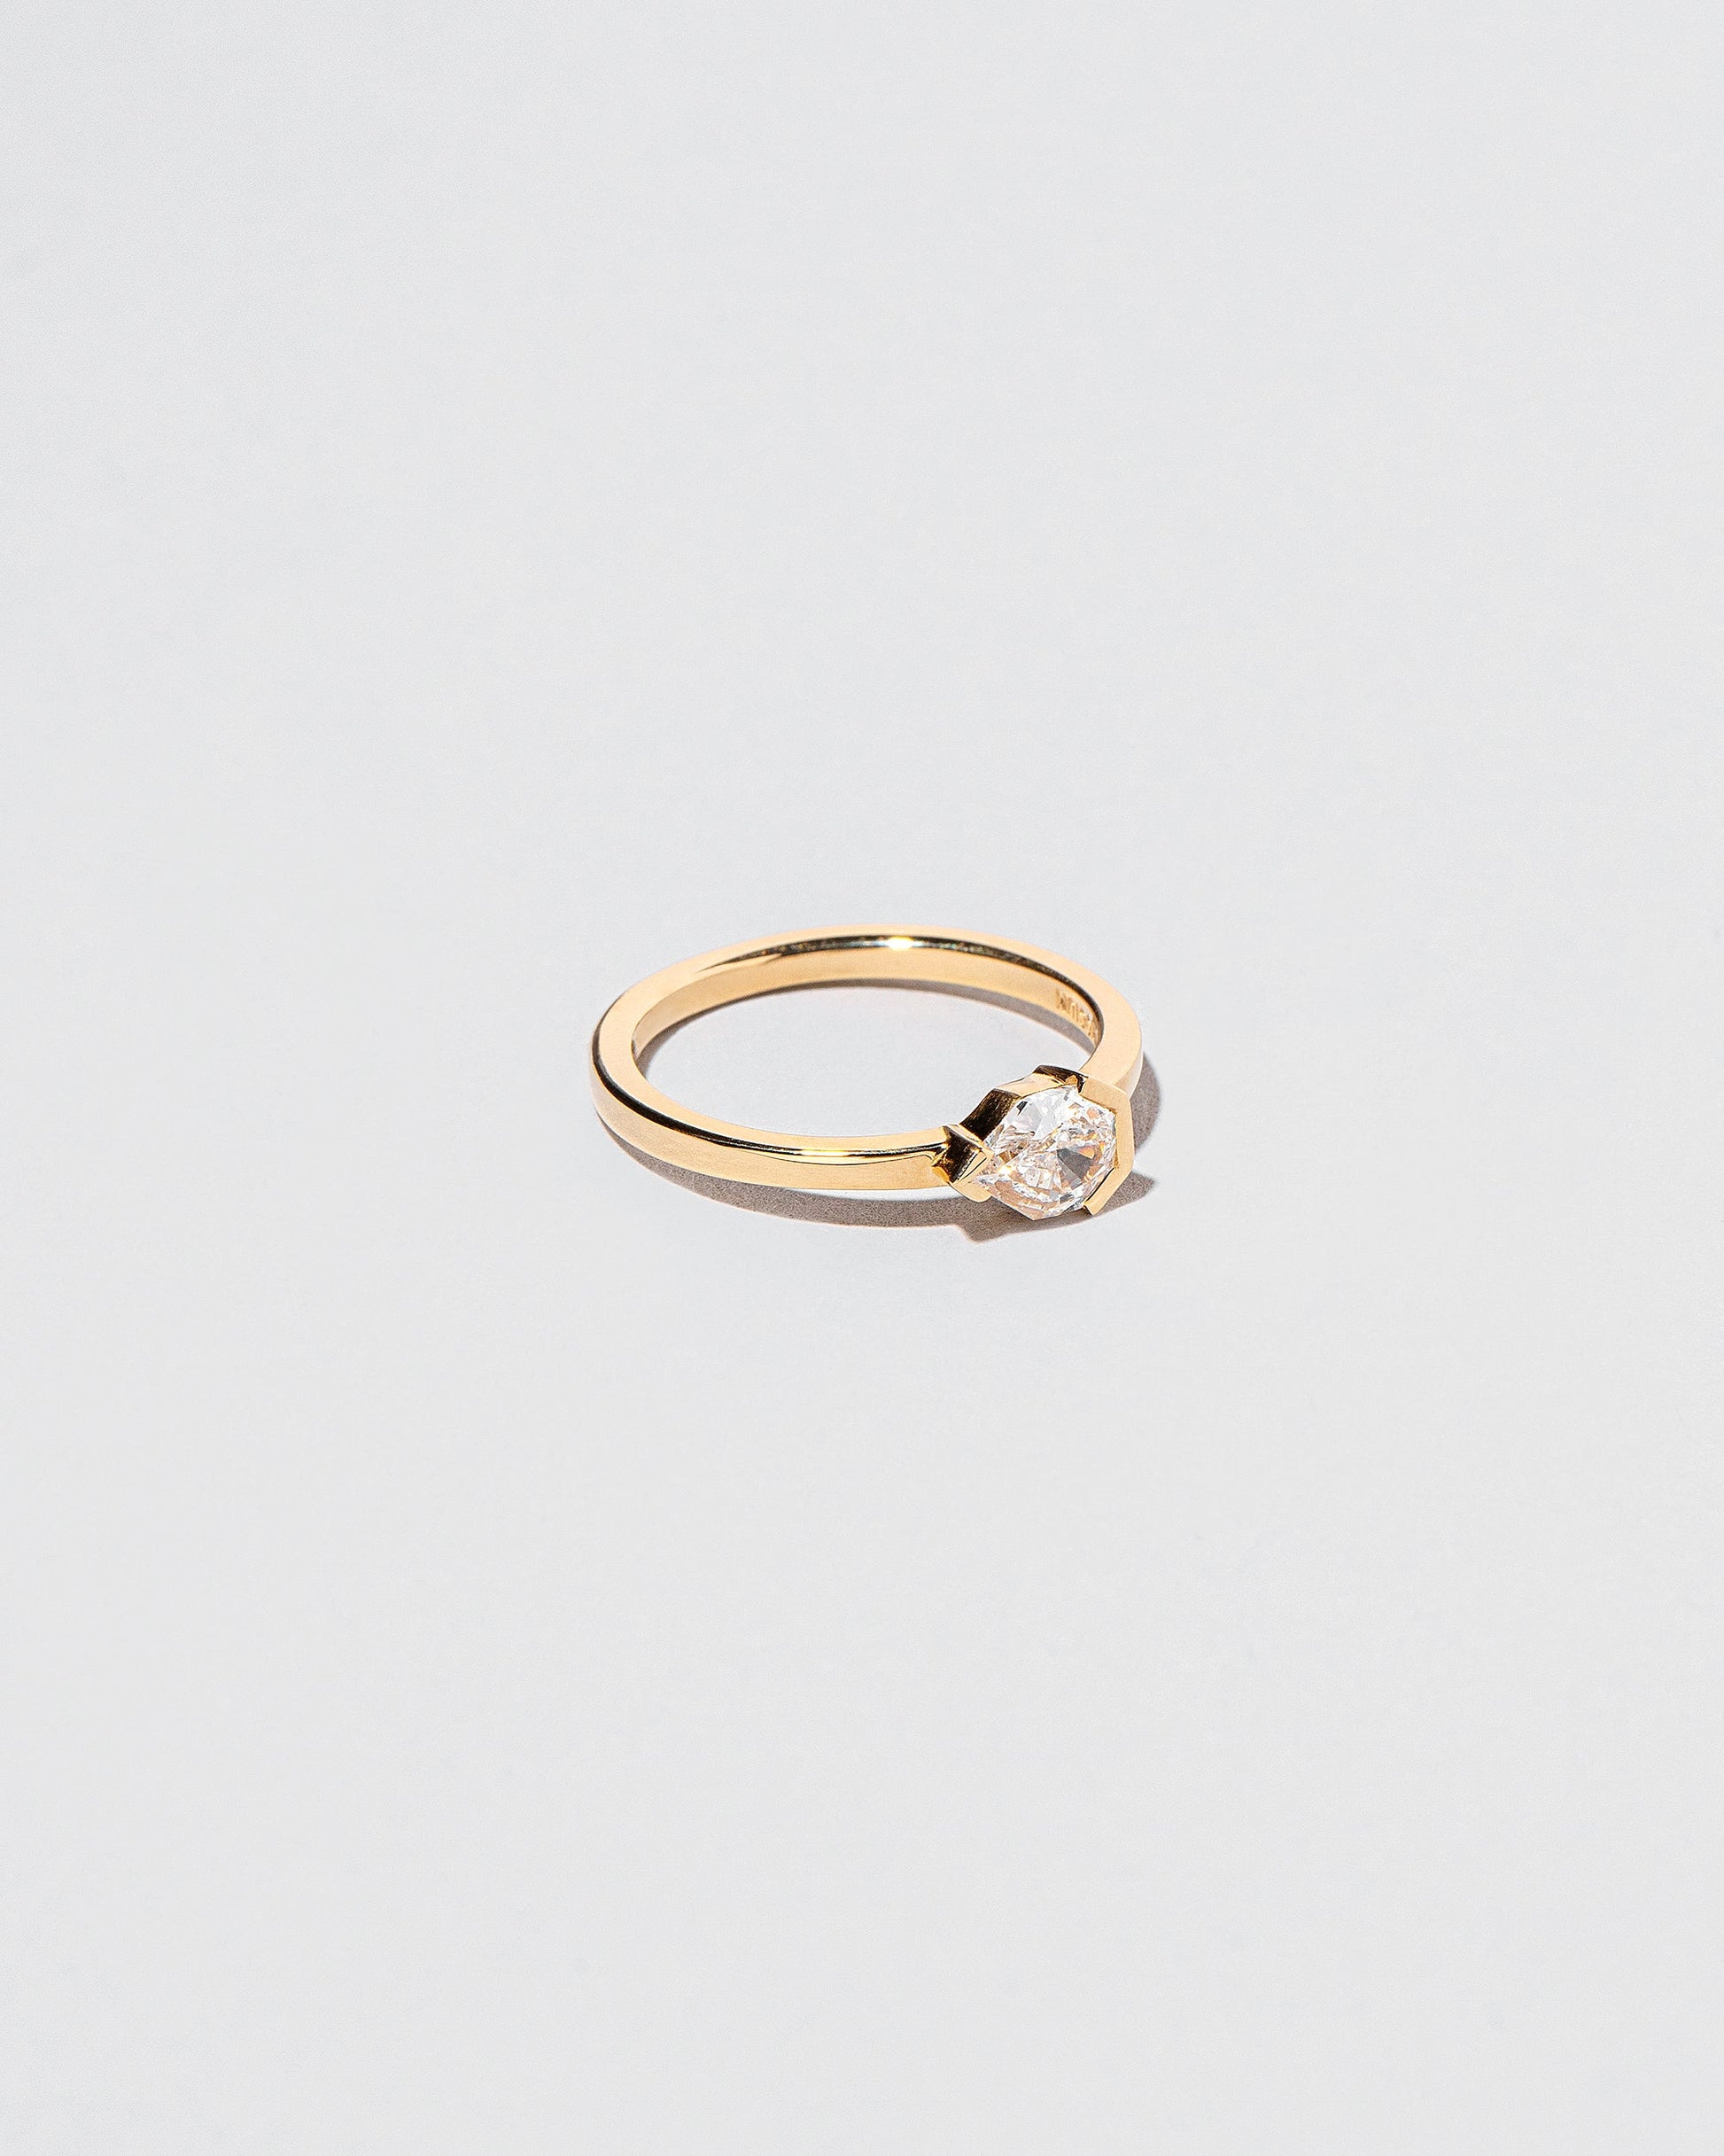  Serenna Ring on light color background.